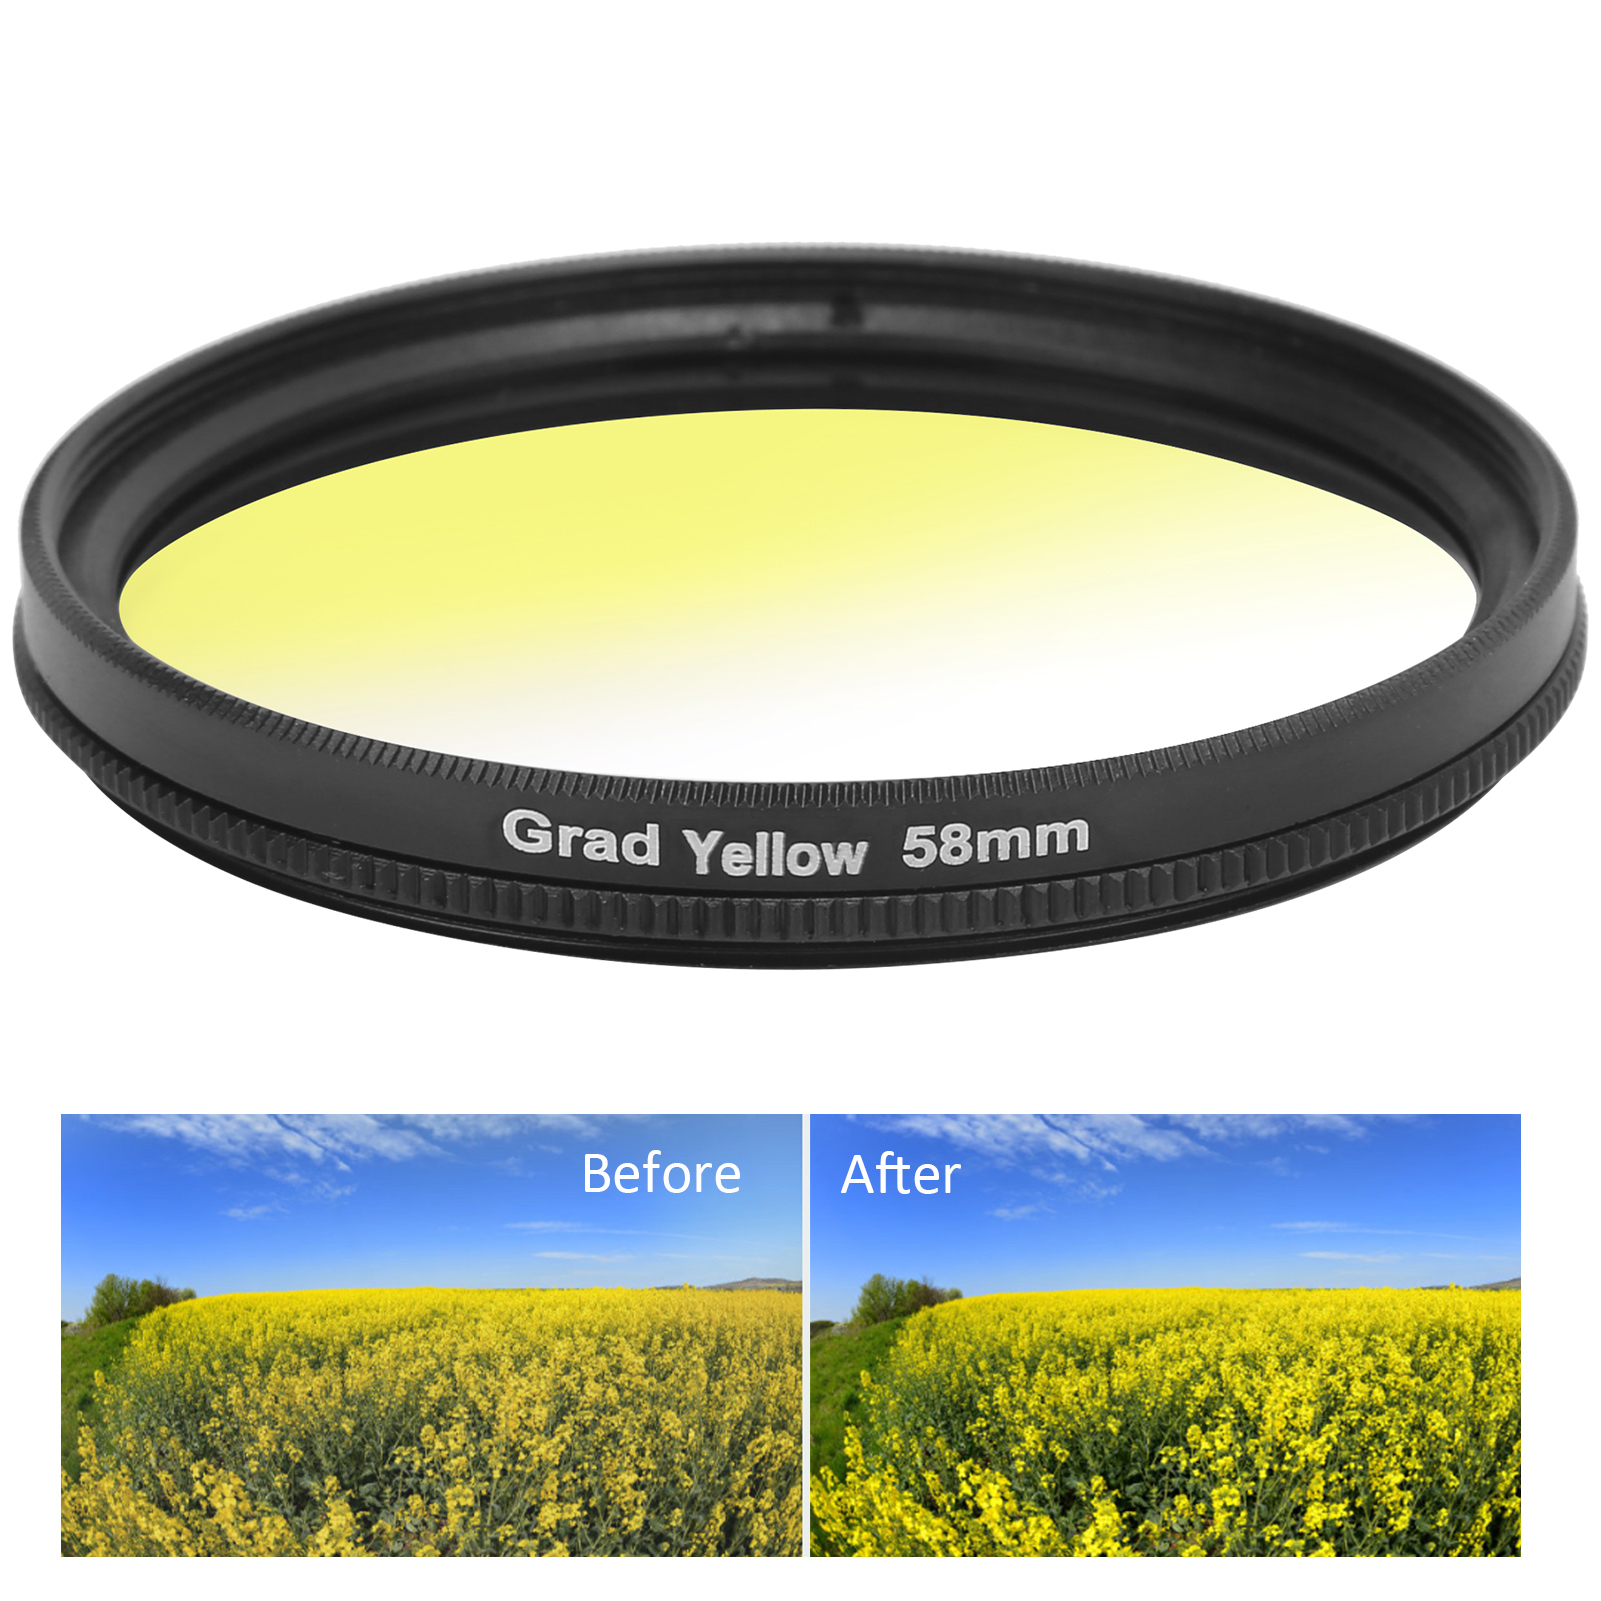 Gradient Filter Waterproof 58mm Lens Filter for Cameras